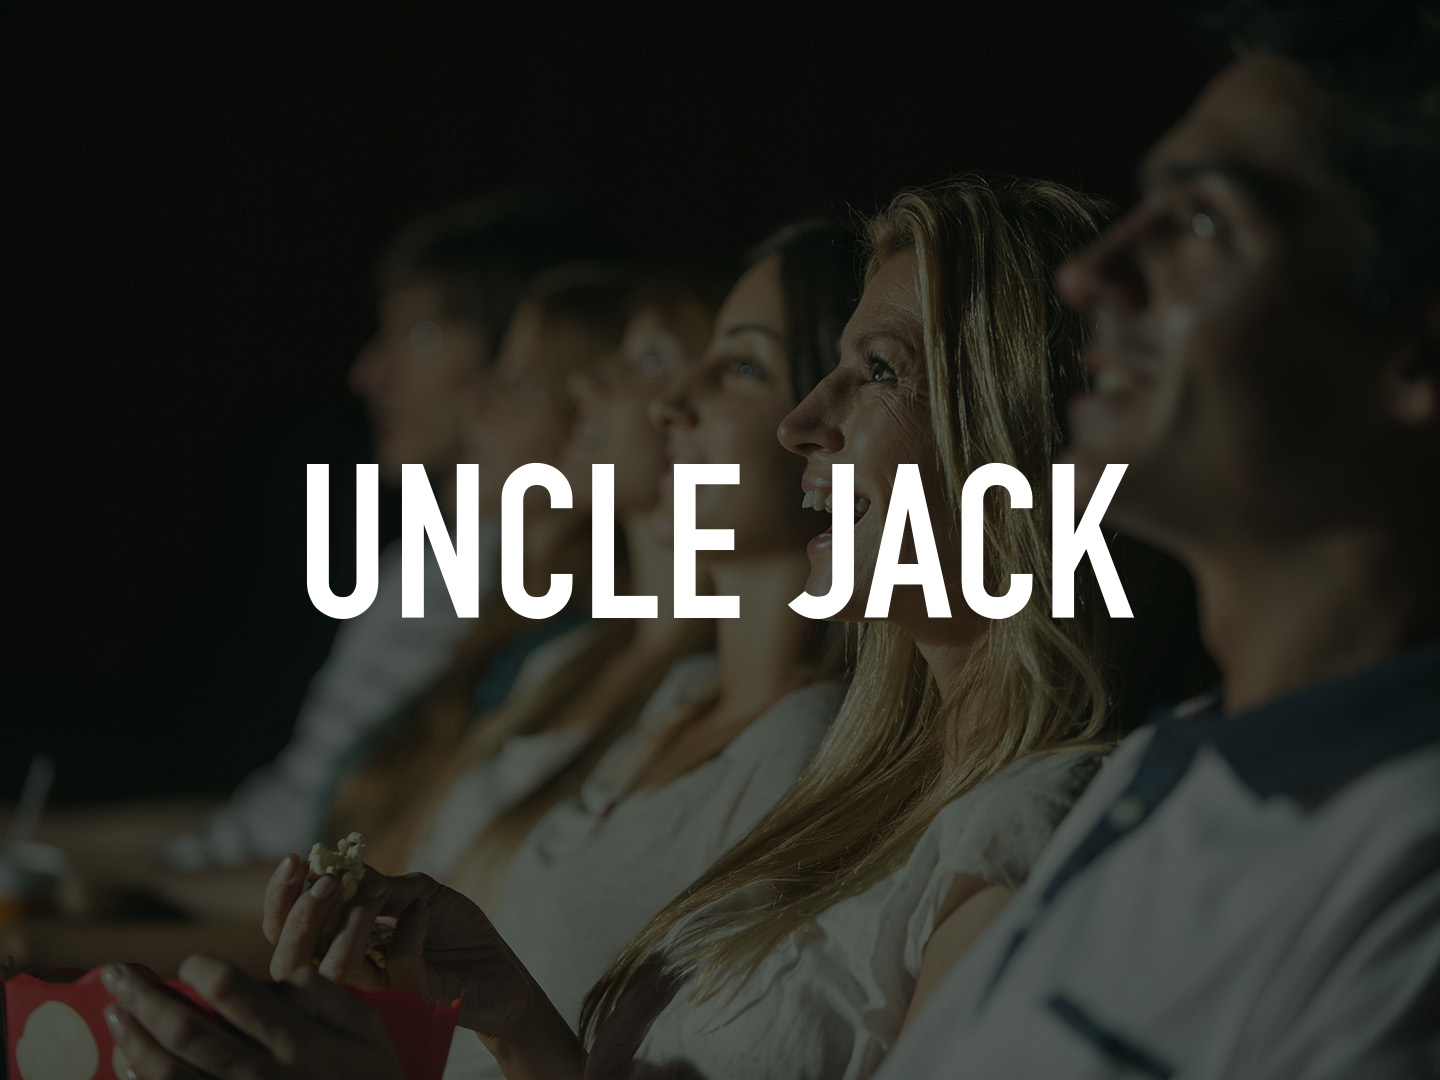 Uncle jacks nieces